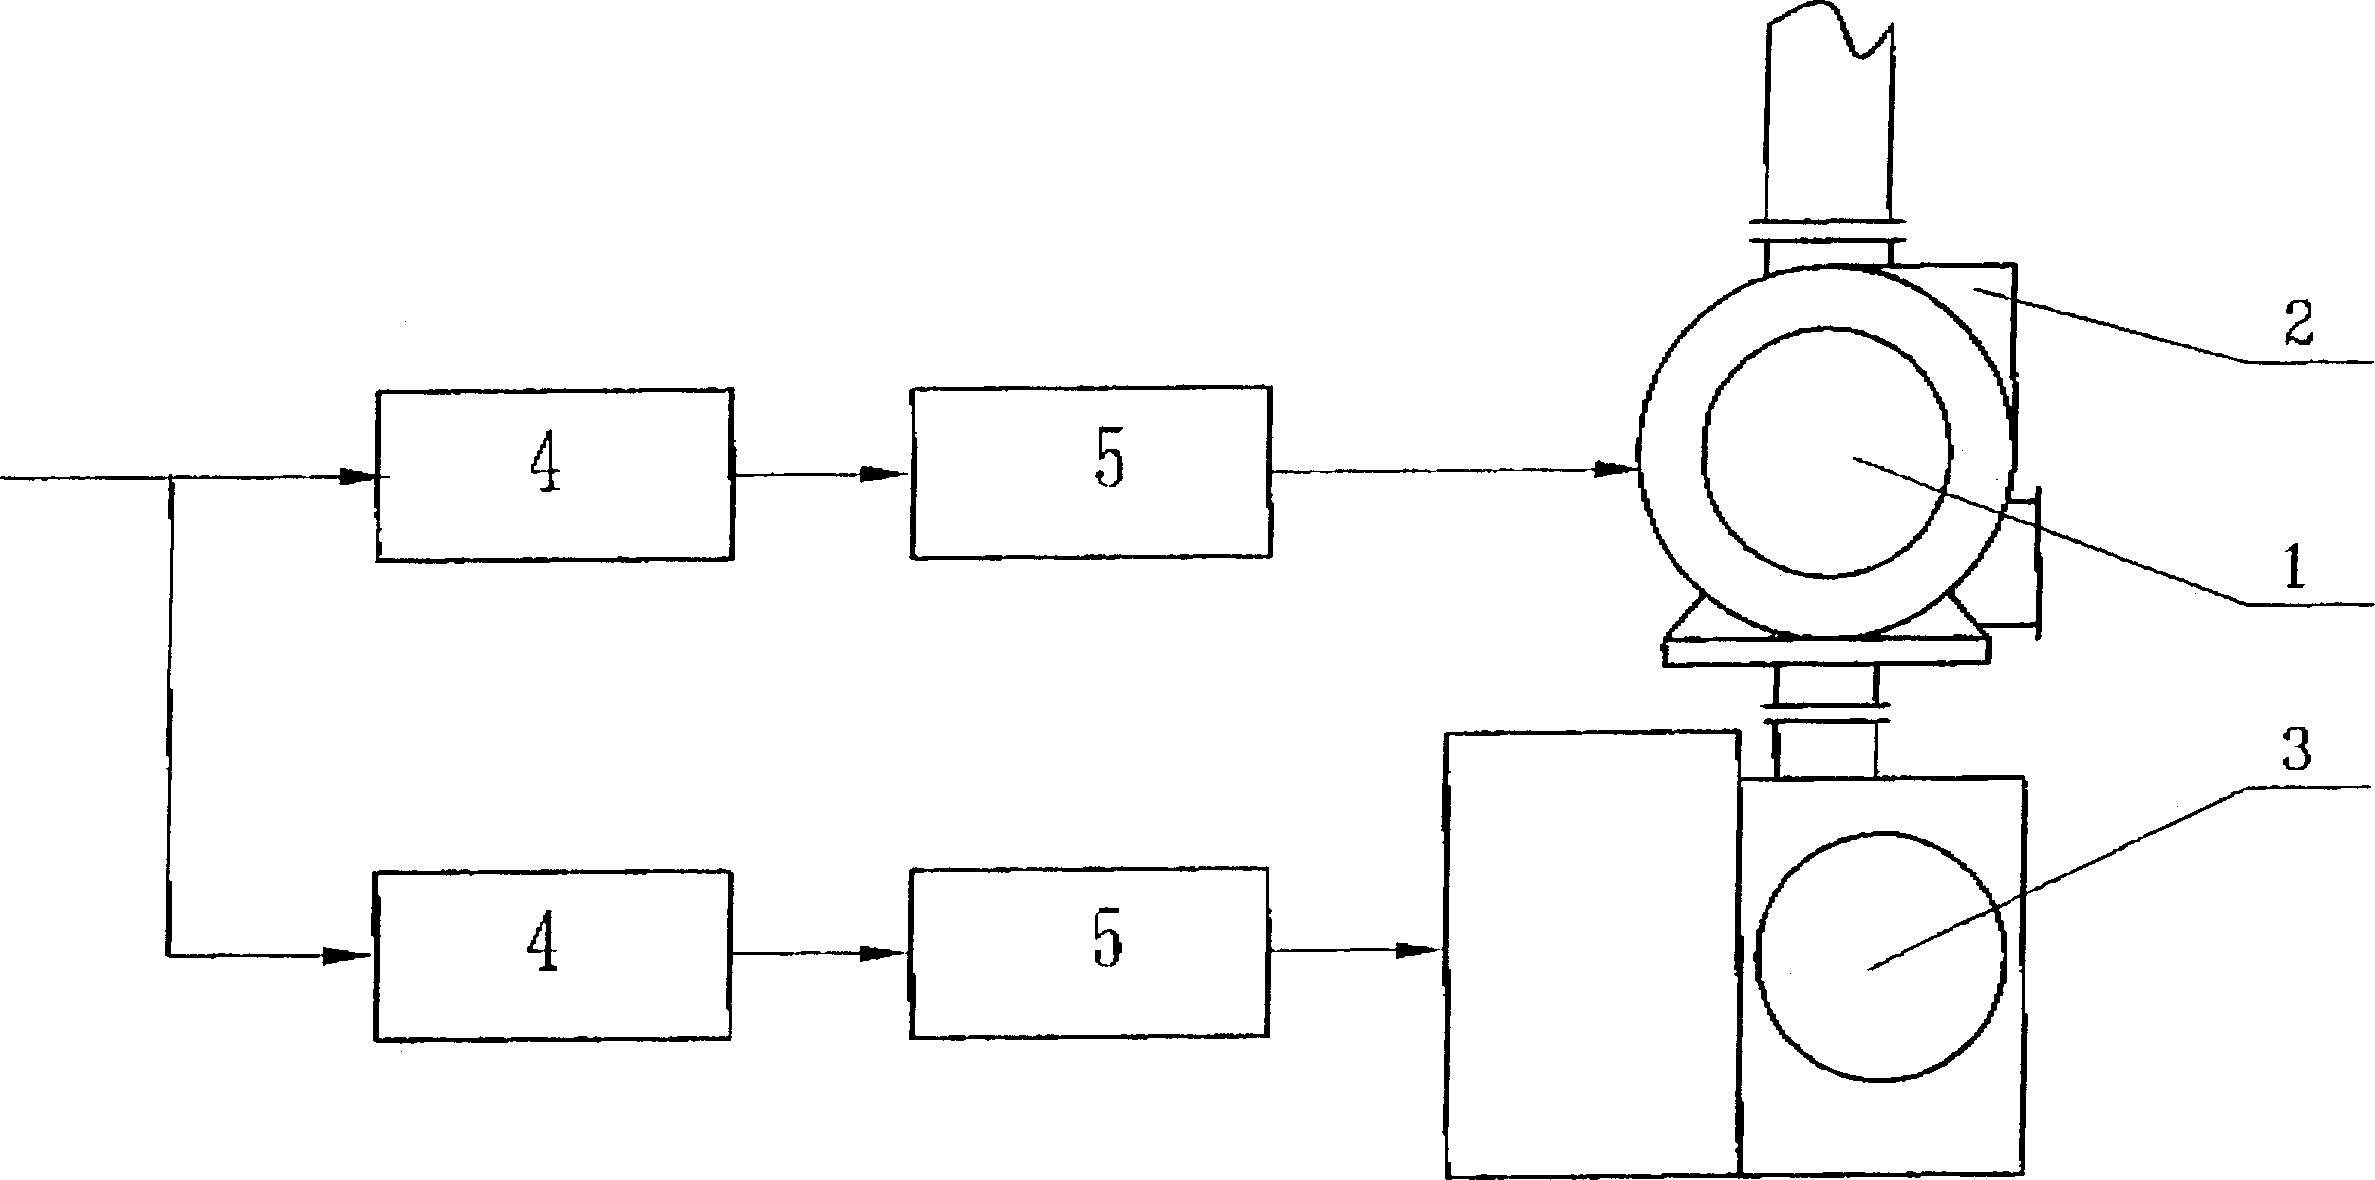 Vacuum Roots pump set and its control method